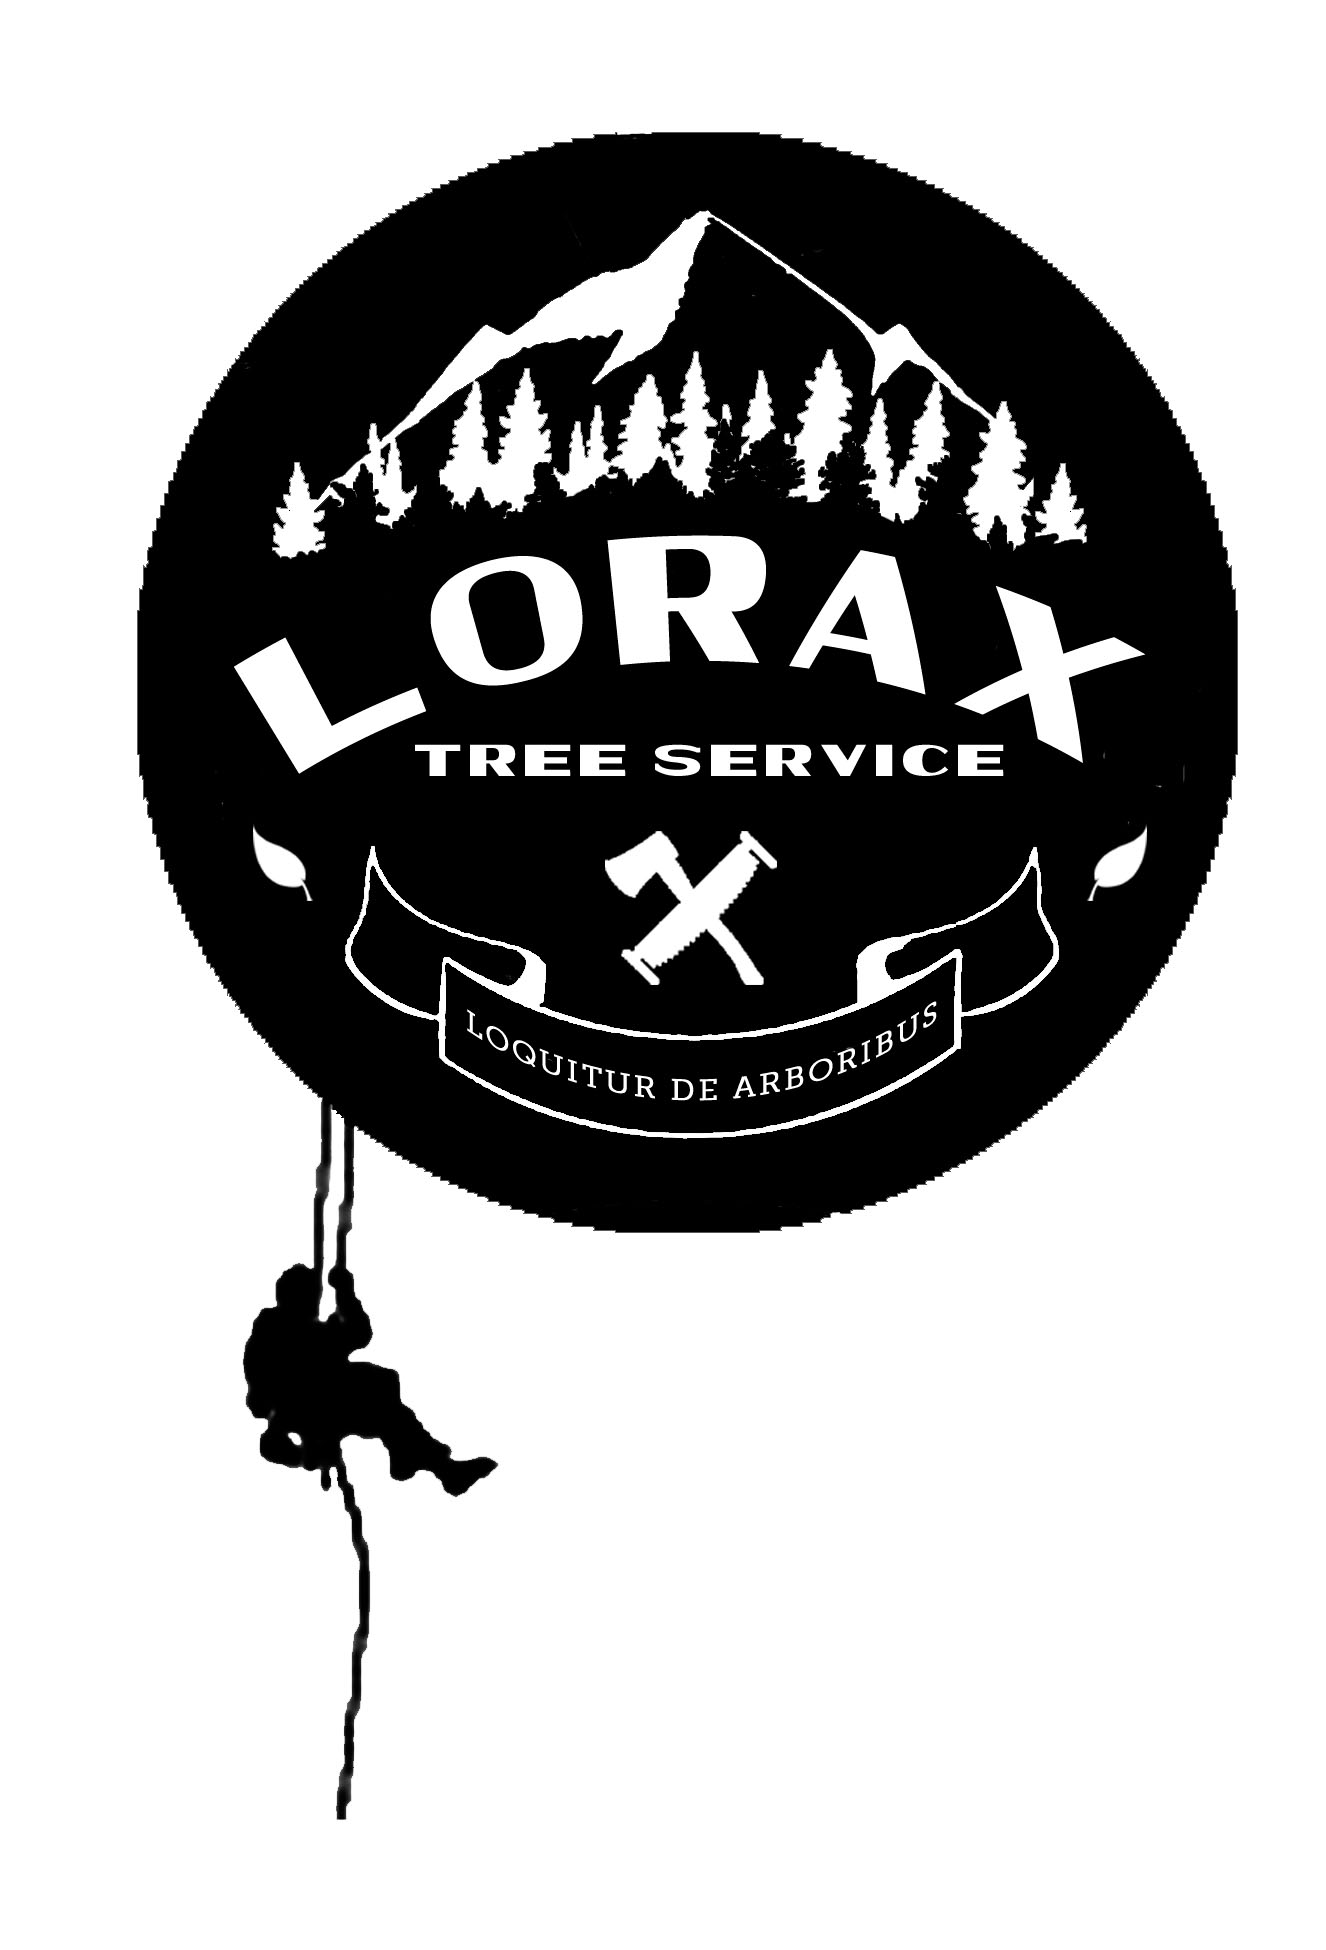 Lorax Tree Service Logo